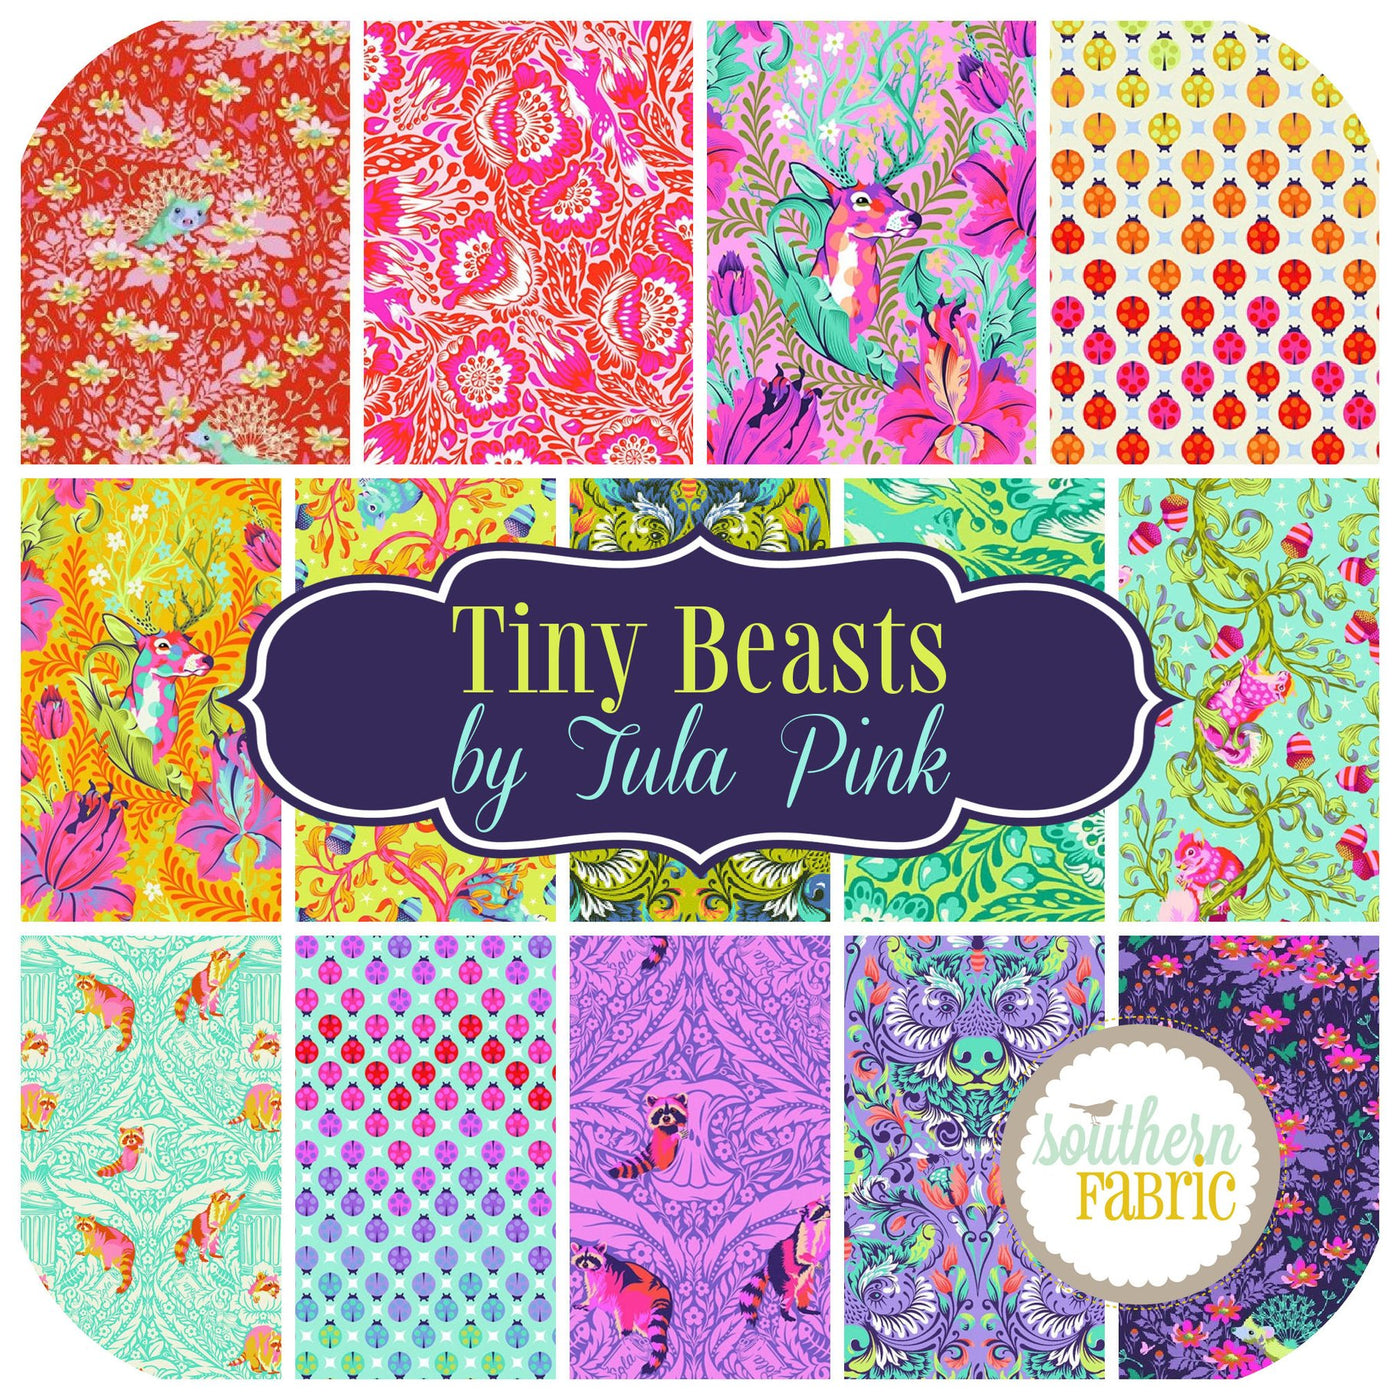 Tiny Beasts Fat Quarter Bundle (14 pcs) by Tula Pink for Free Spirit